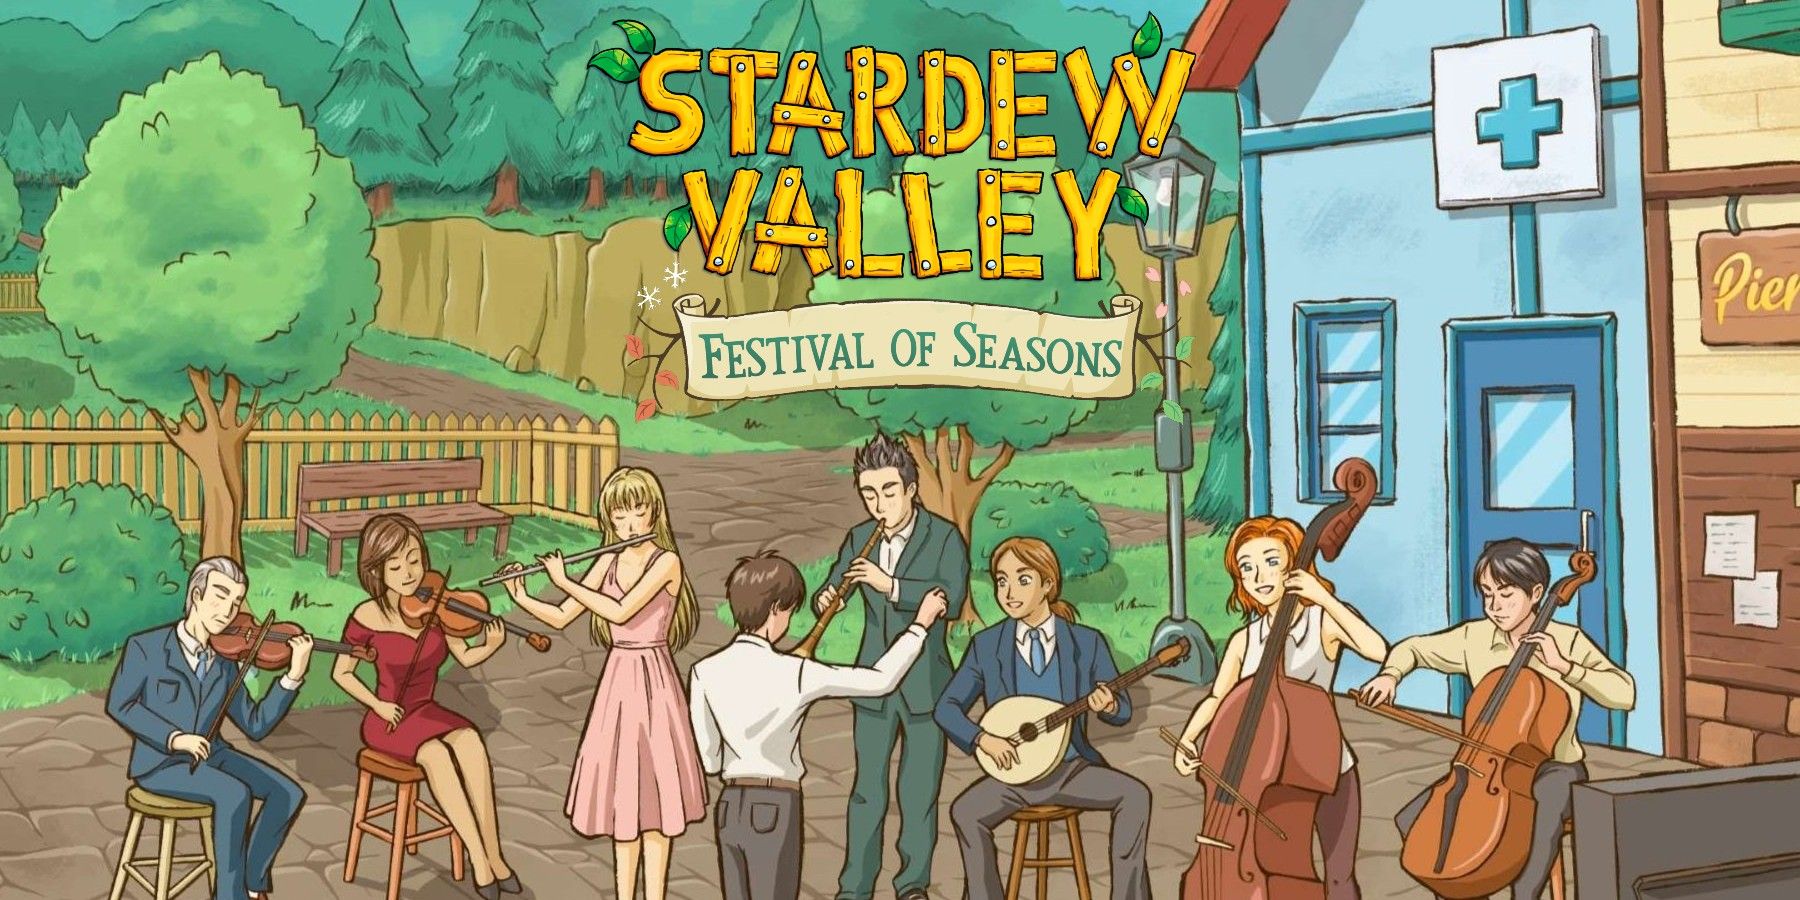 stardew-valley-festival-of-seasons-concert-tour